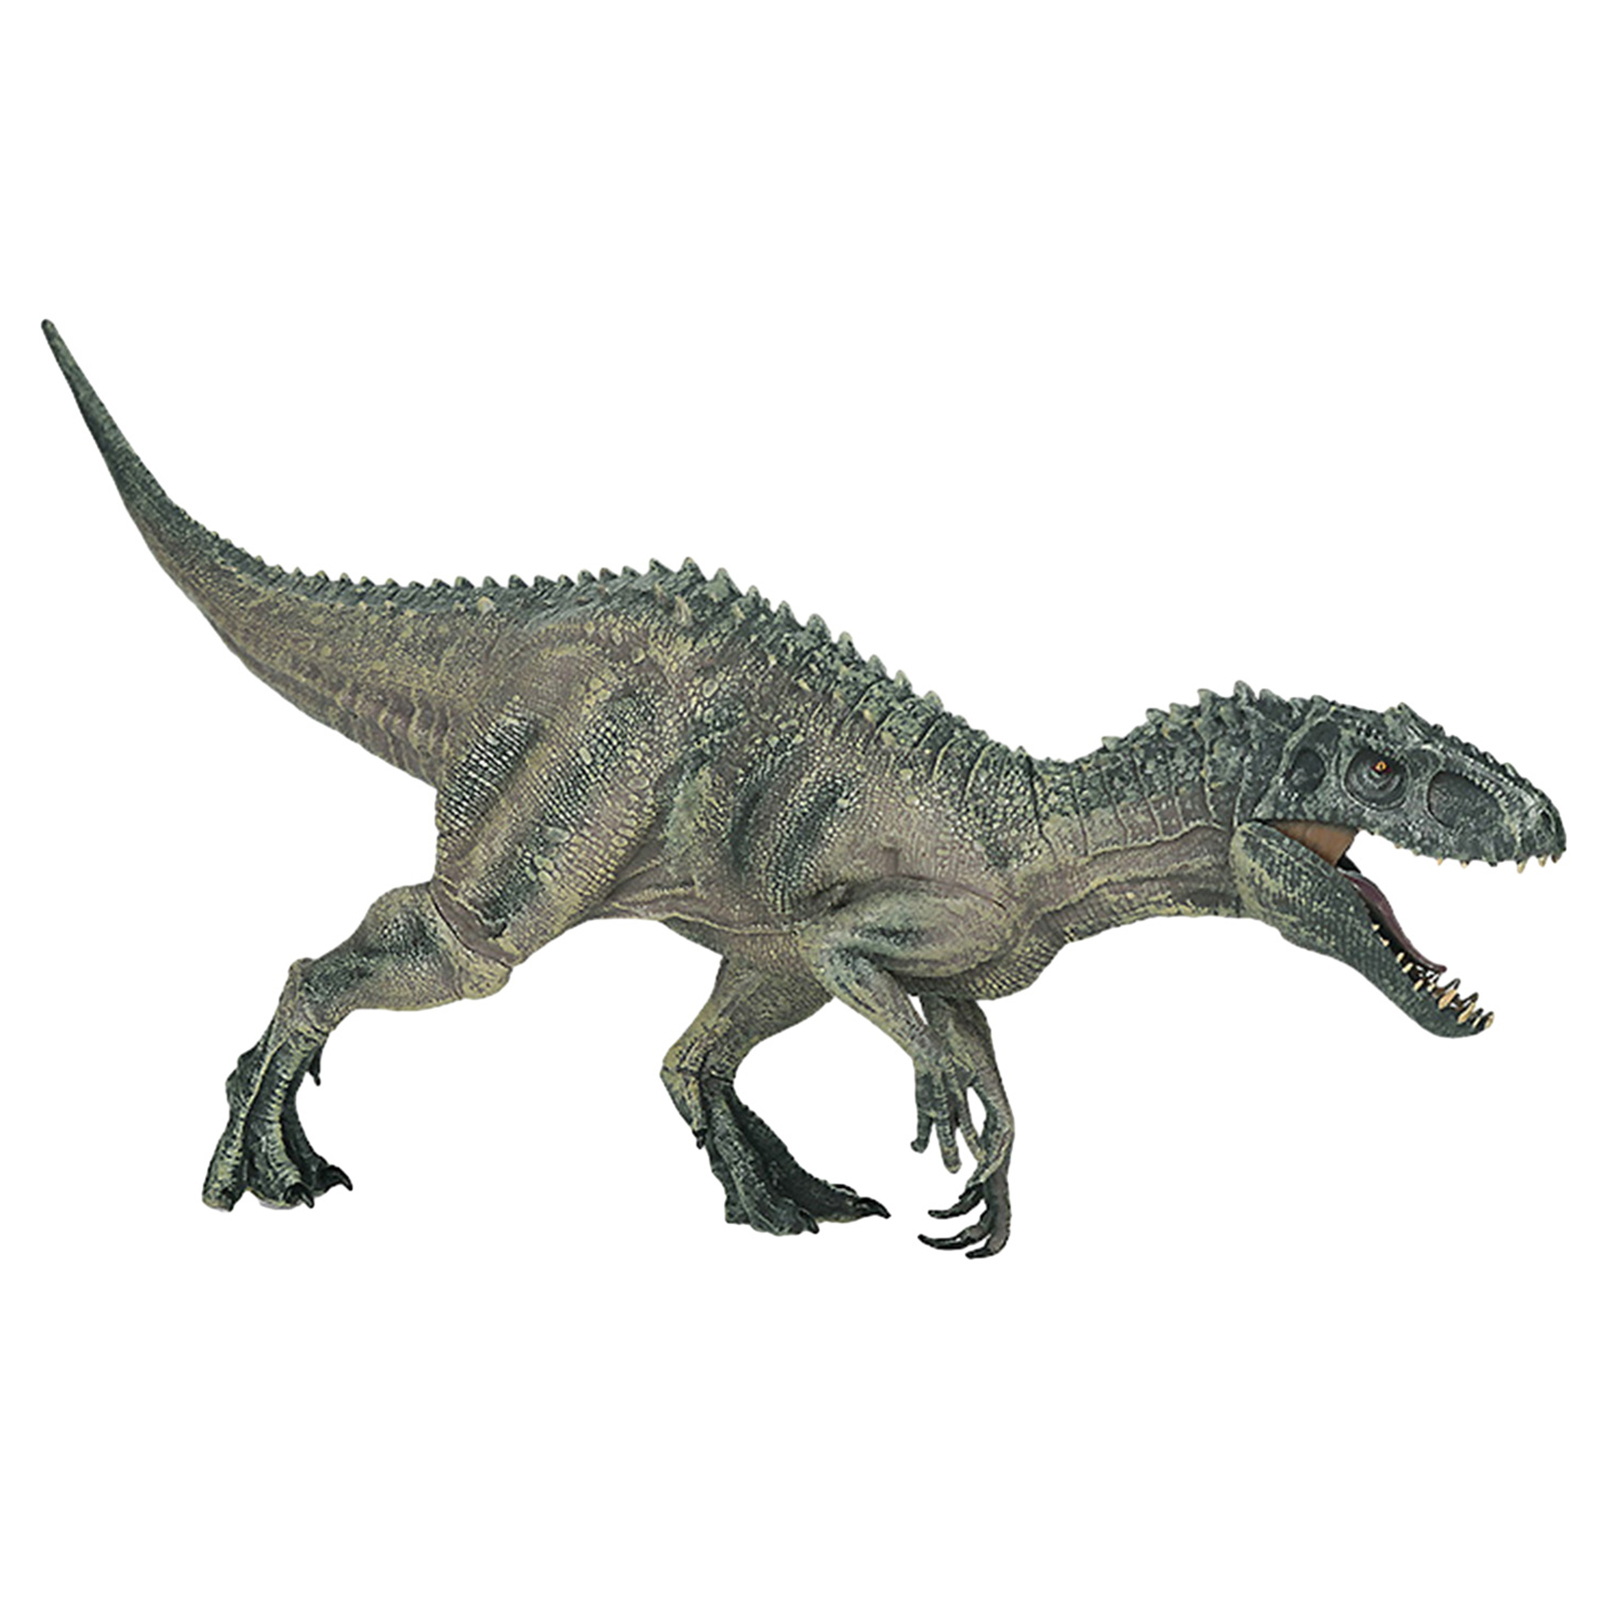 ASTELLA Collectible Dinosaur Figure Dinosaur Model Realistic Miniature